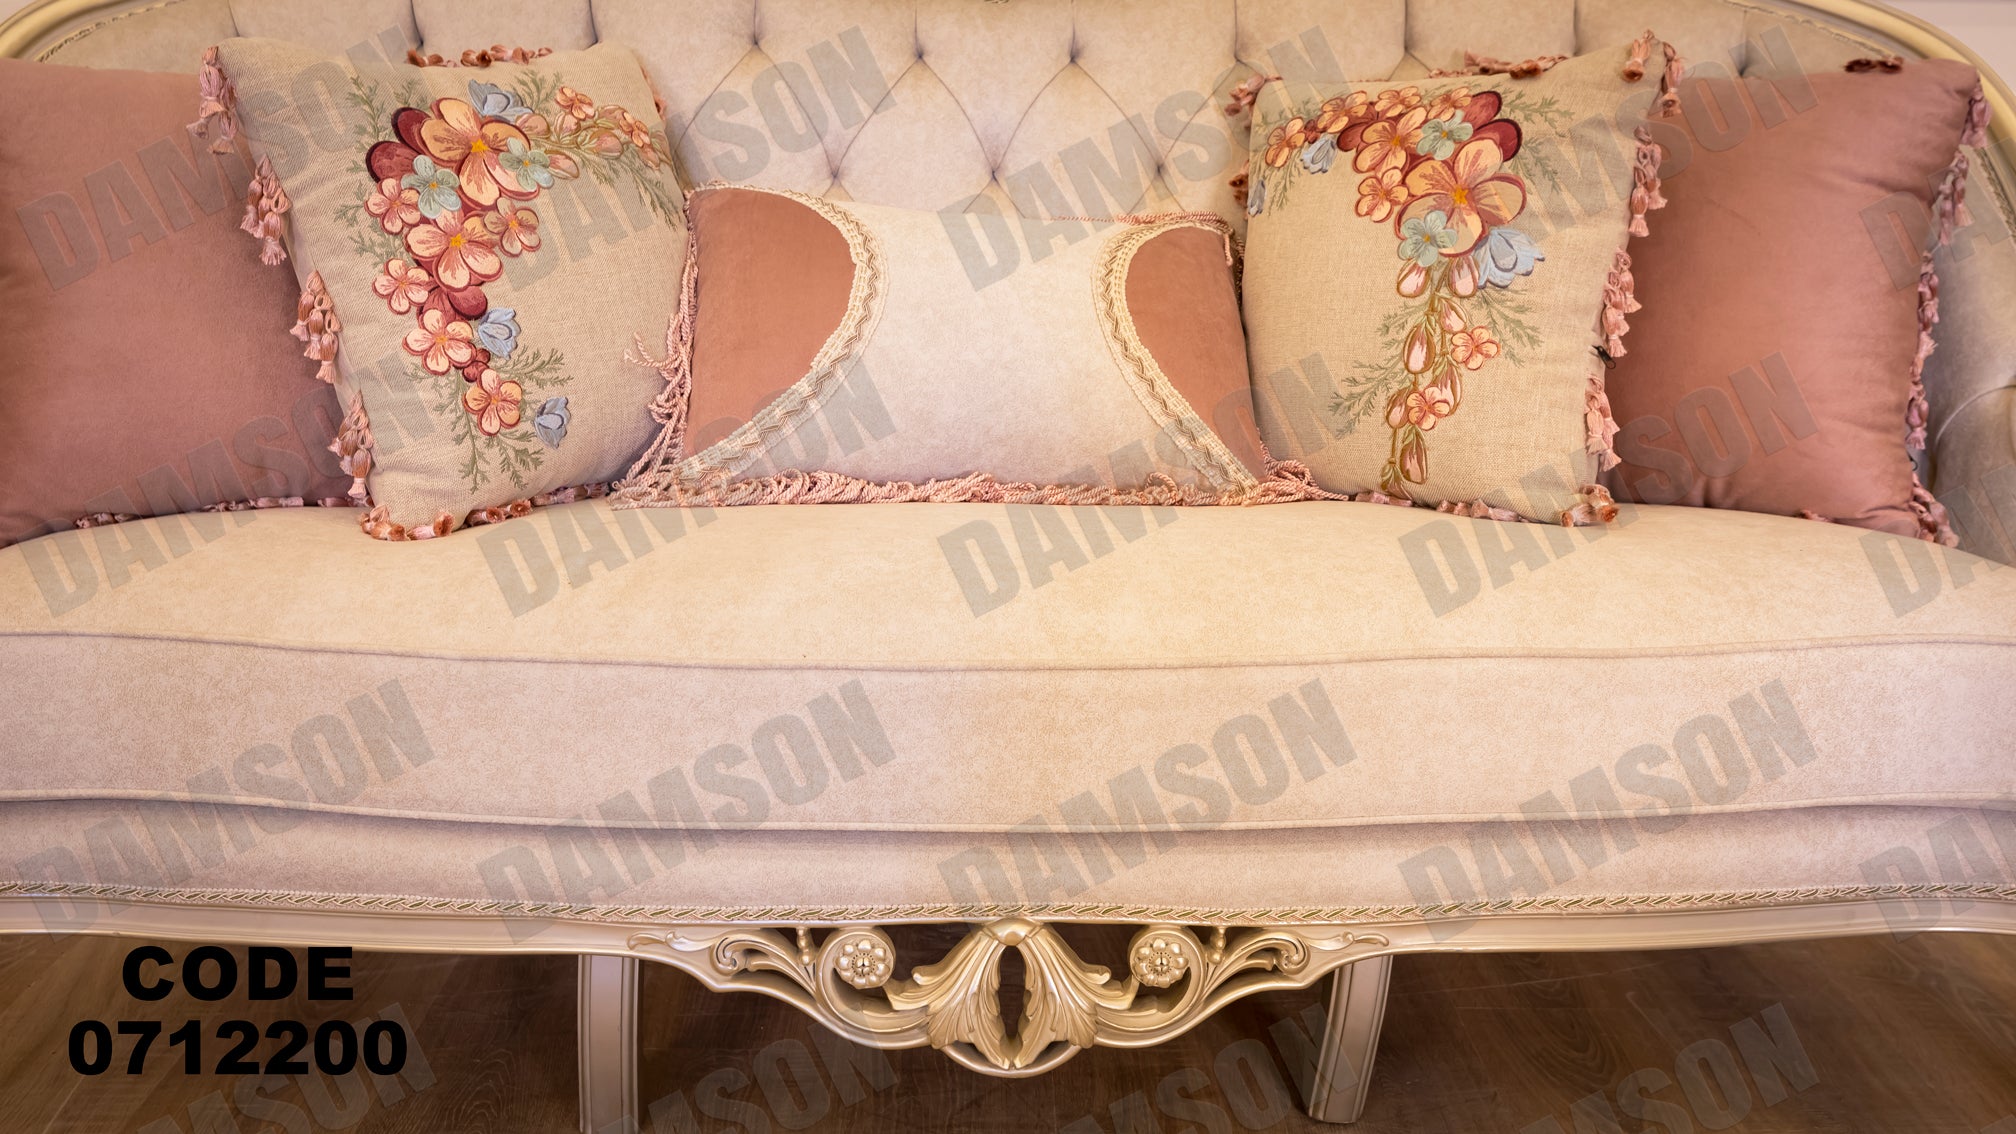 صالون 122 - Damson Furniture